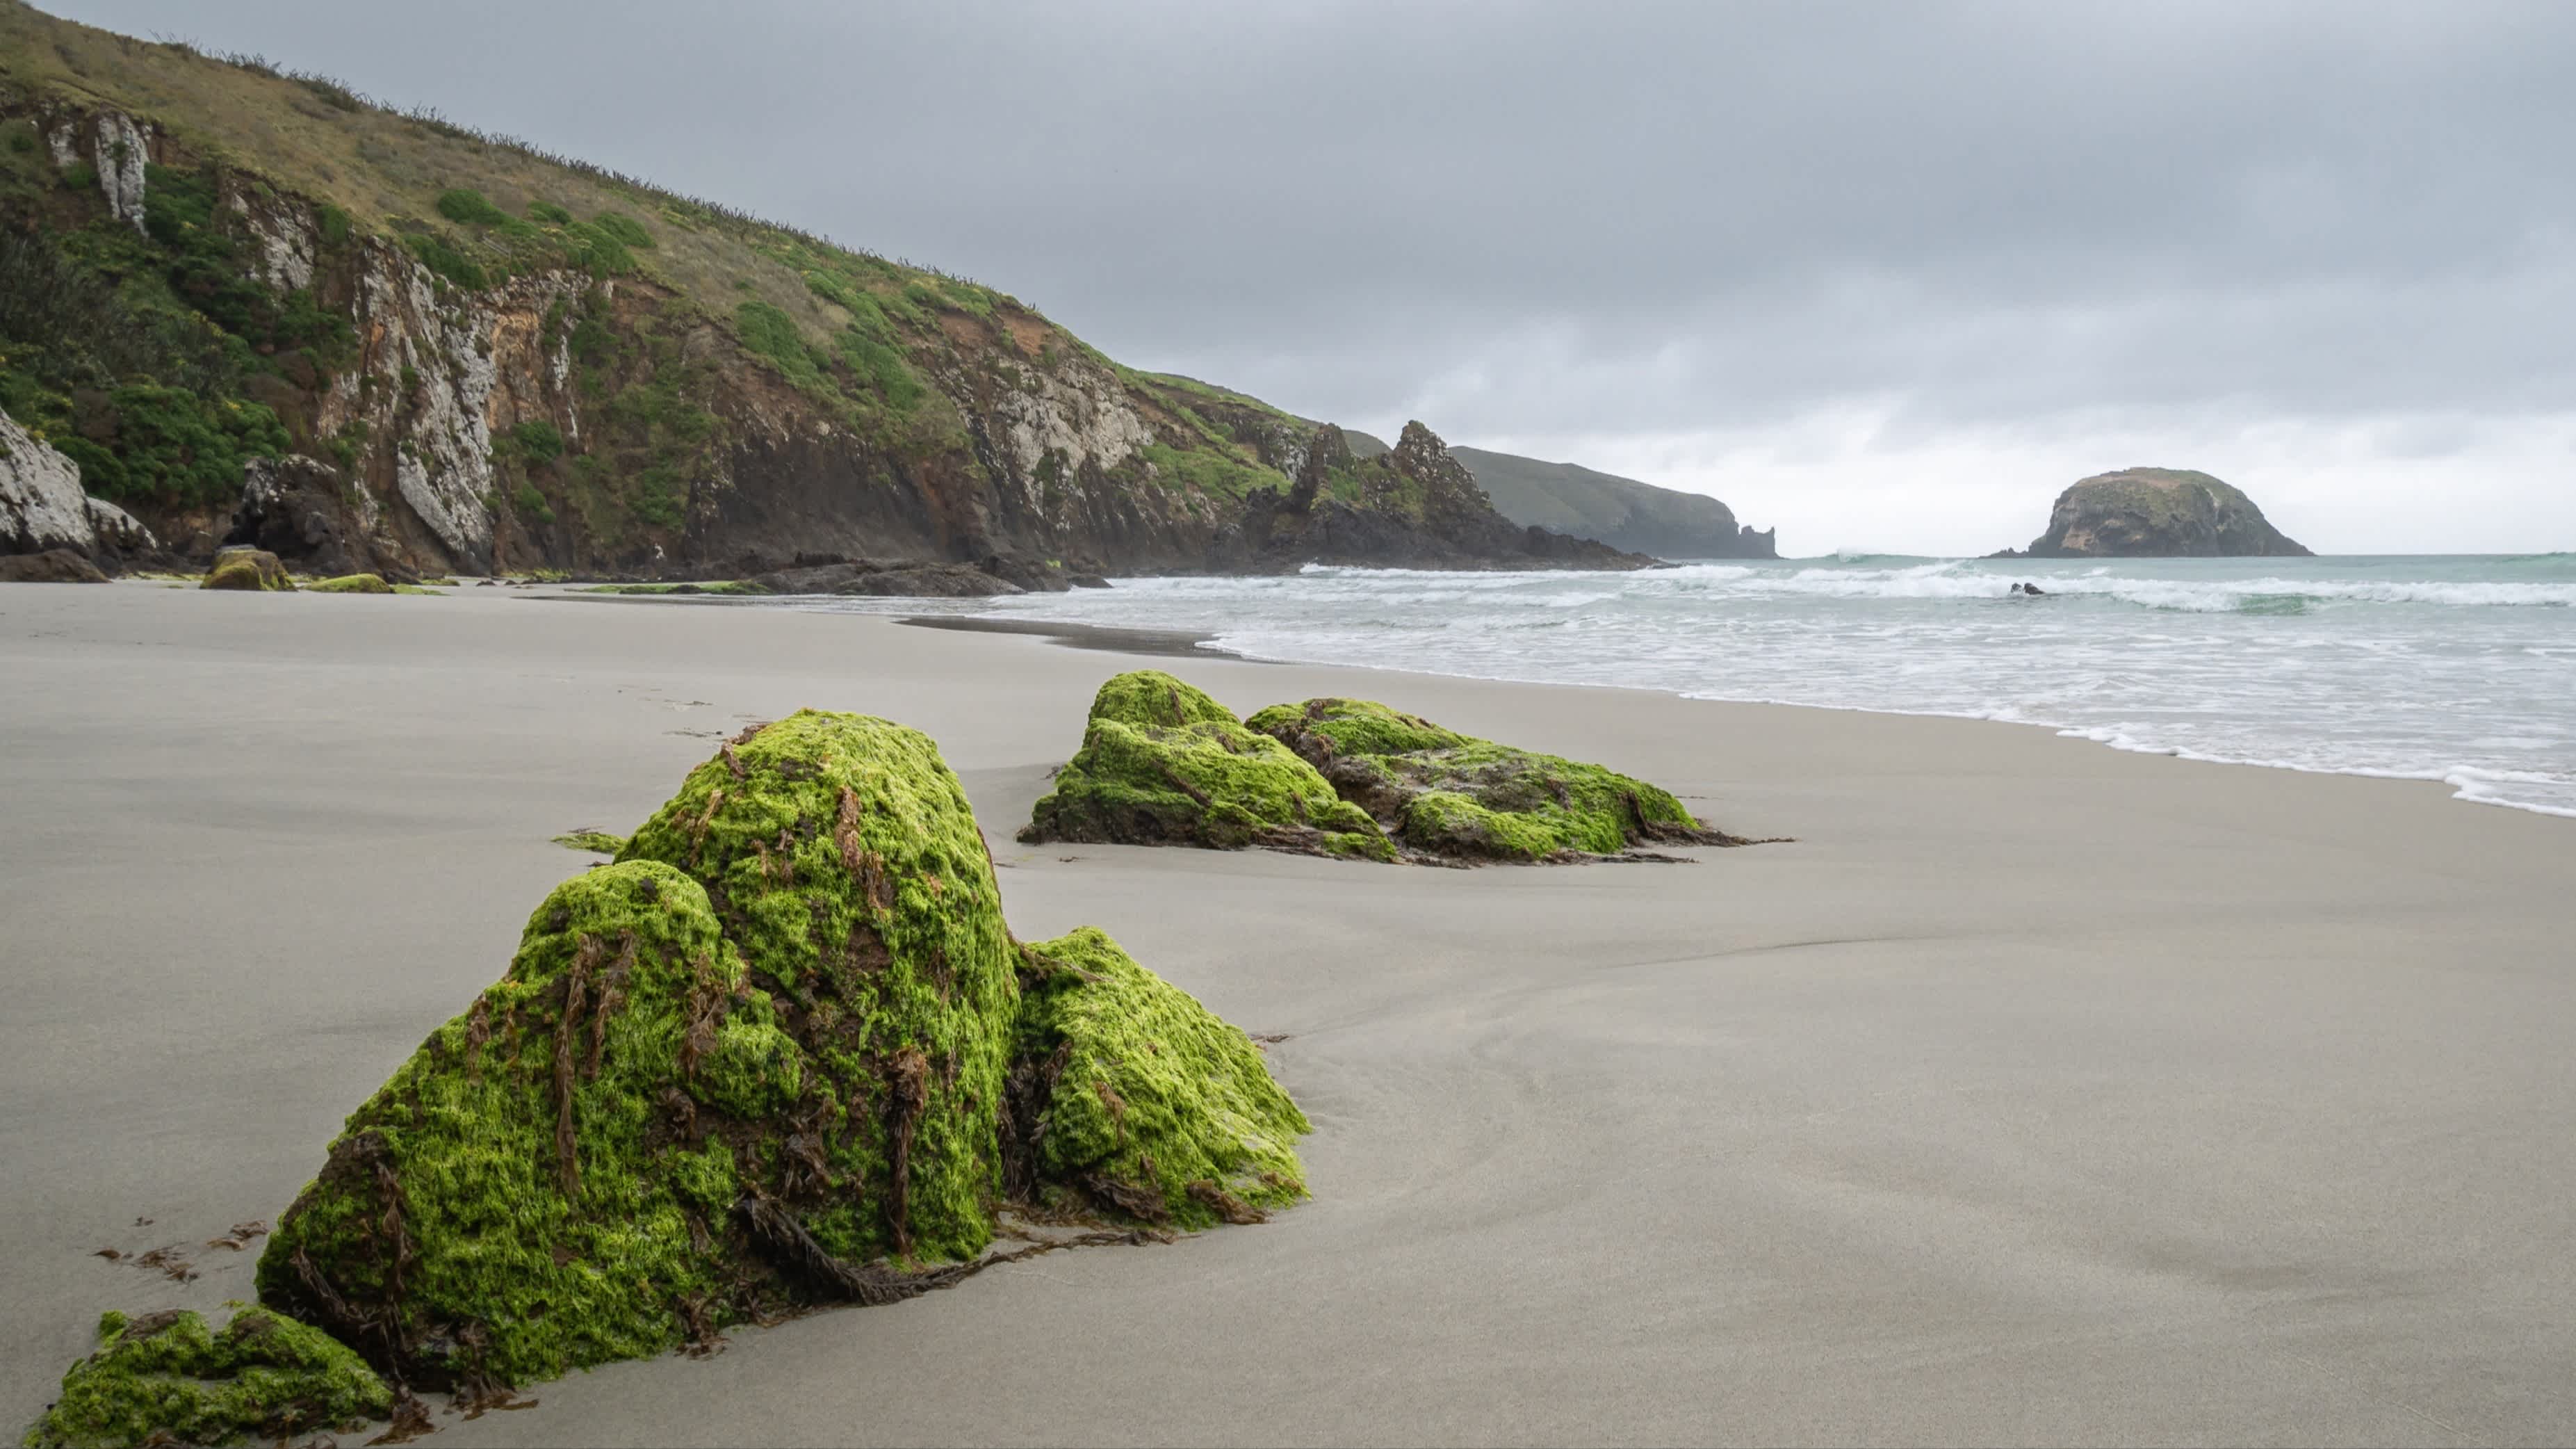 Aufnahme bei bewölktem Tag am Allans Beach, Dunedin, Otago Peninsula, Neuseeland mit dem Meer, Klippen sowie Felsen im Bild.

